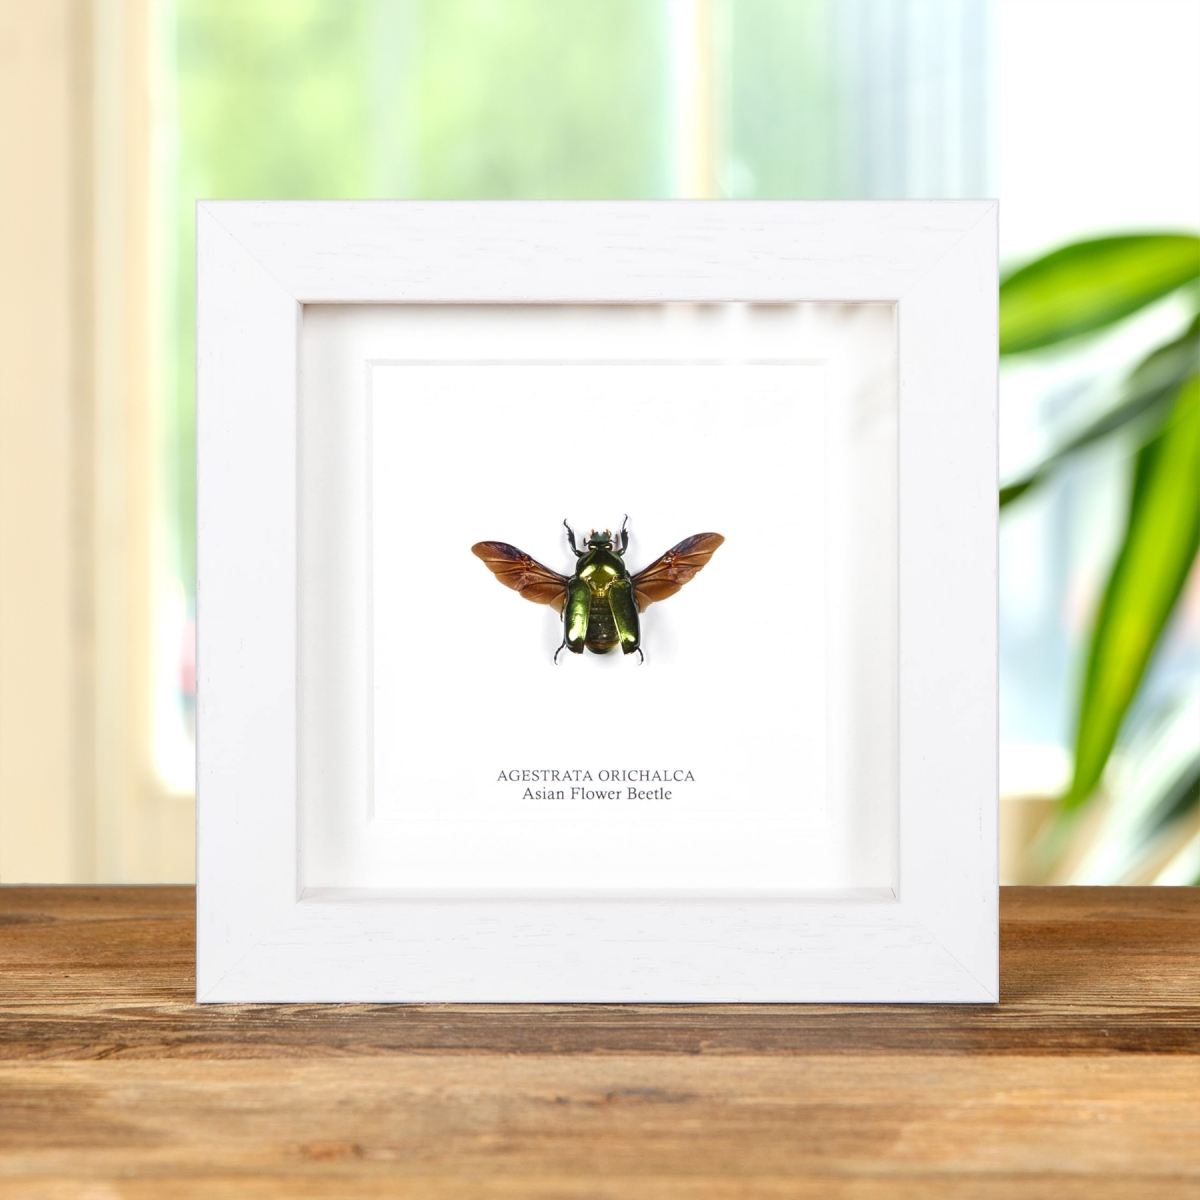 Asian Flower Beetle In Box Frame (Agestrata orichalca)